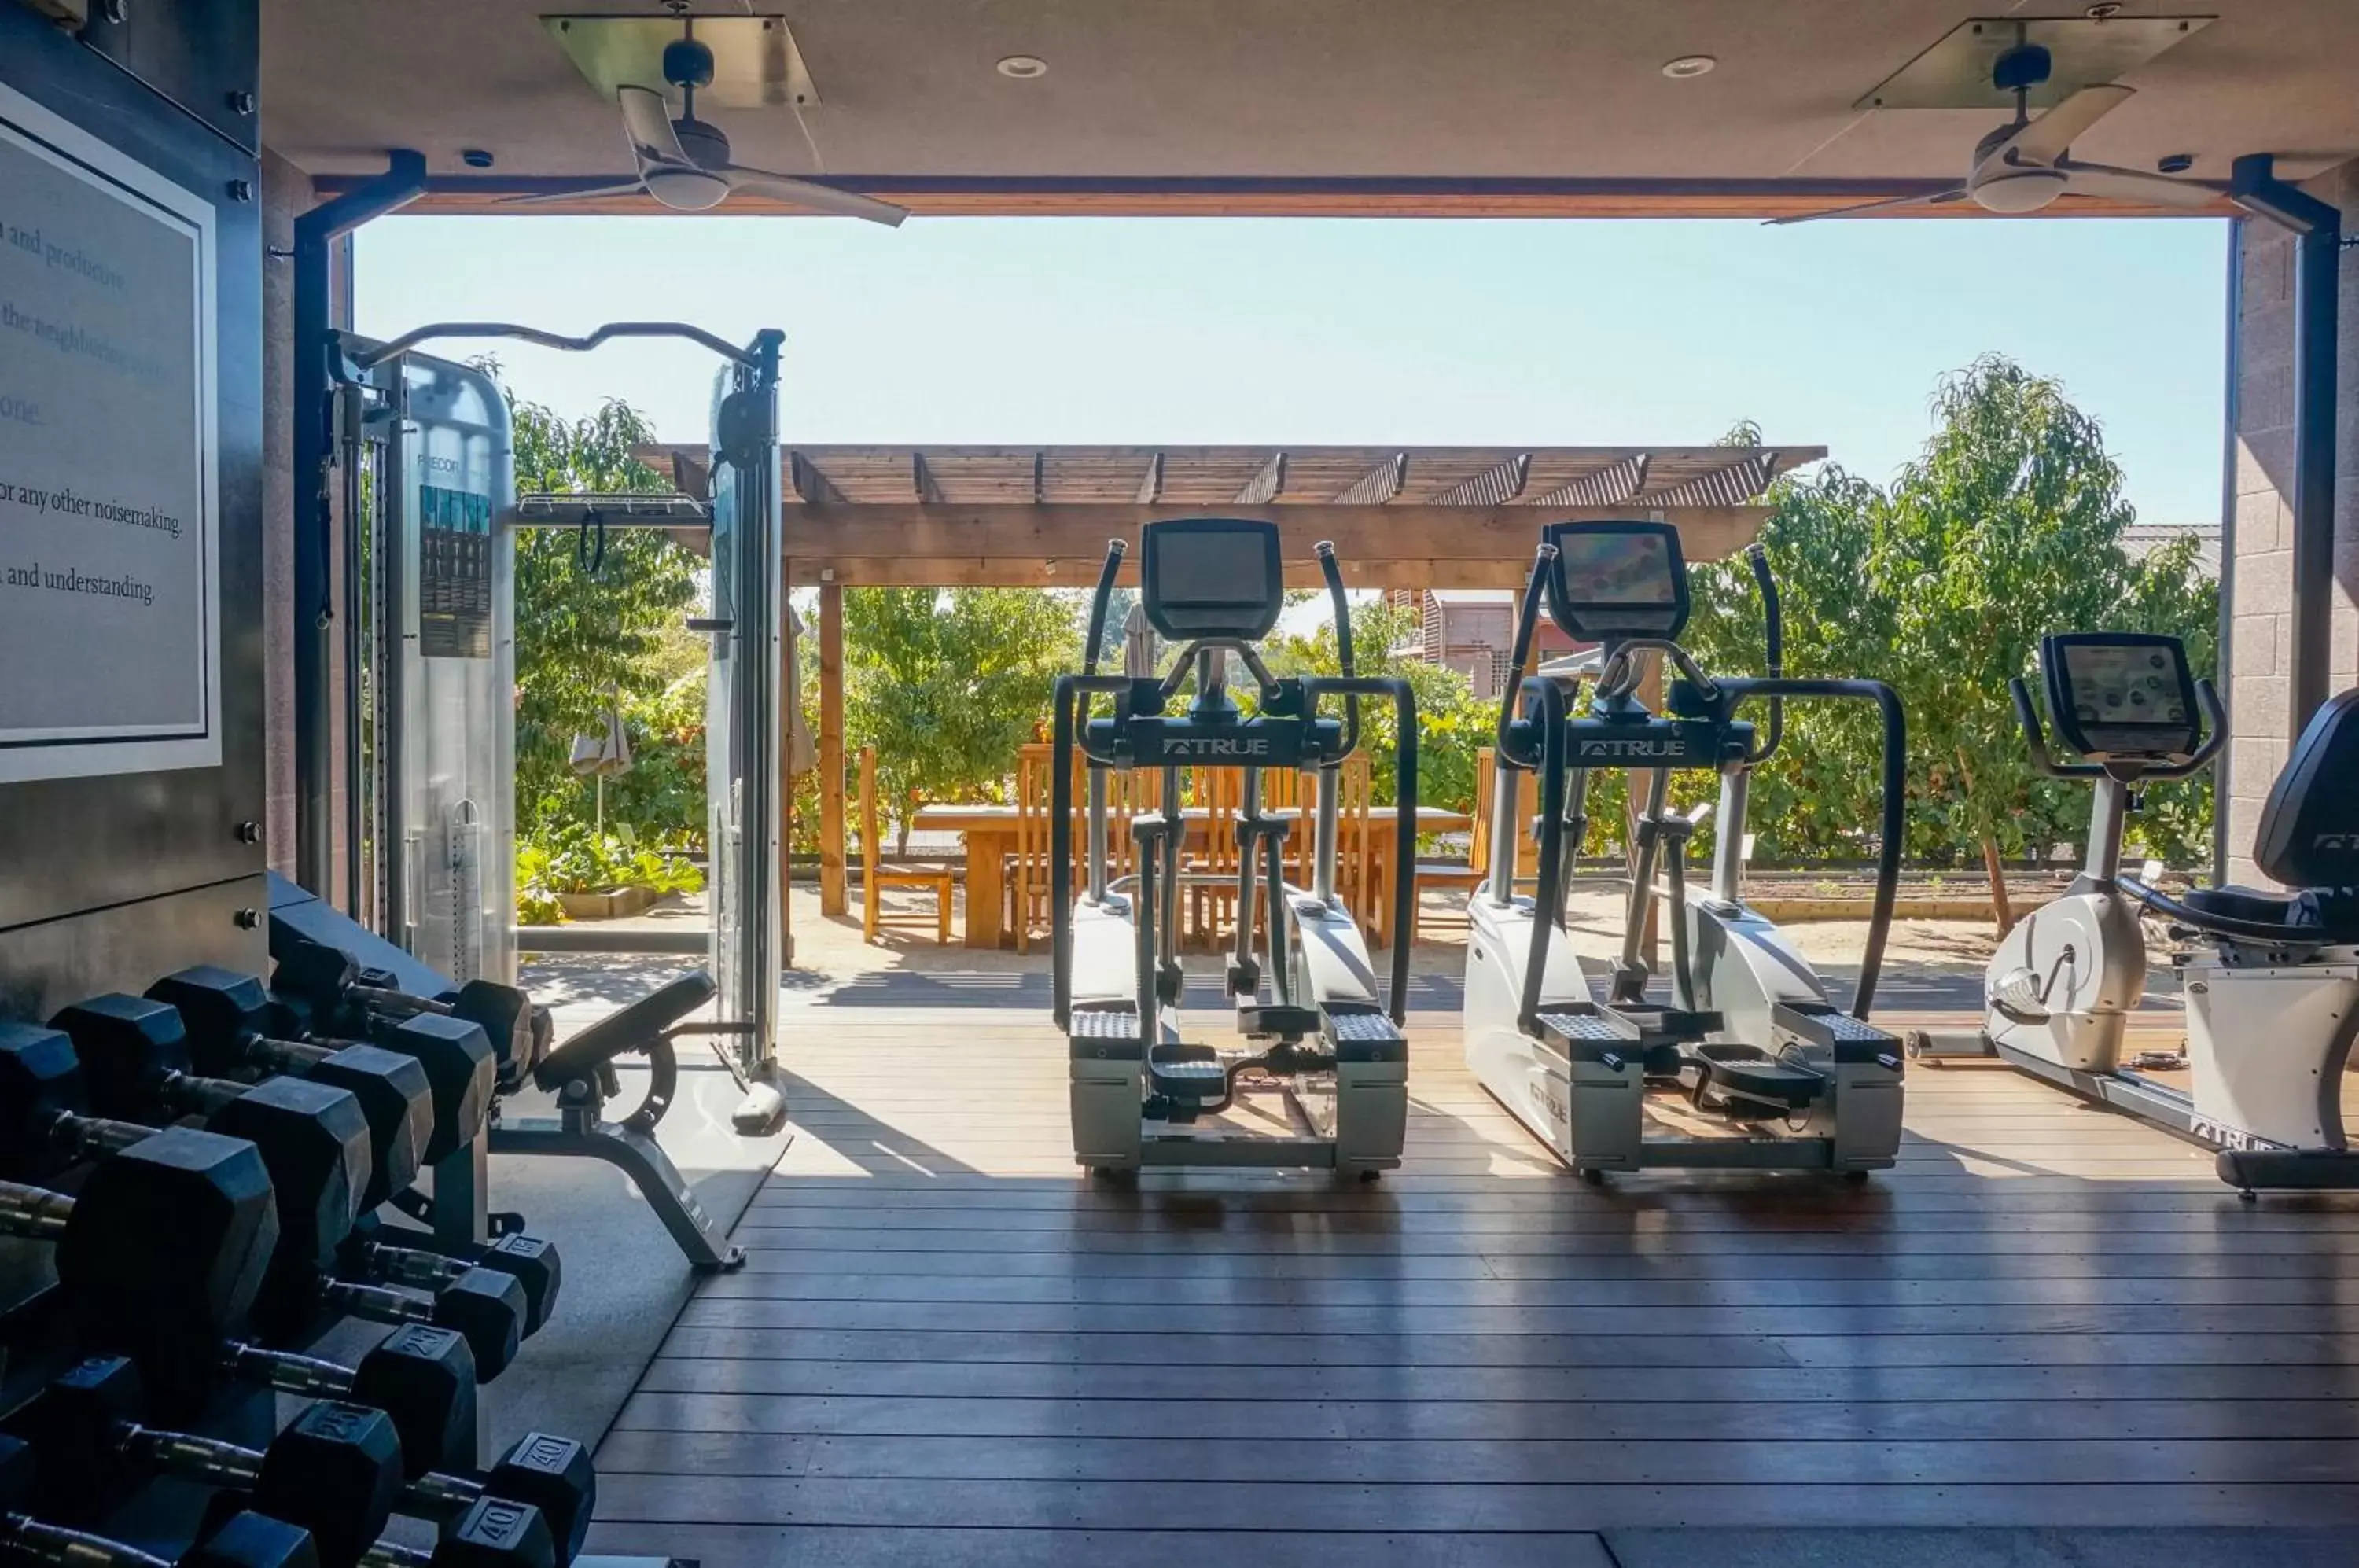 Fitness centre/facilities, Fitness Center/Facilities in Bardessono Hotel and Spa